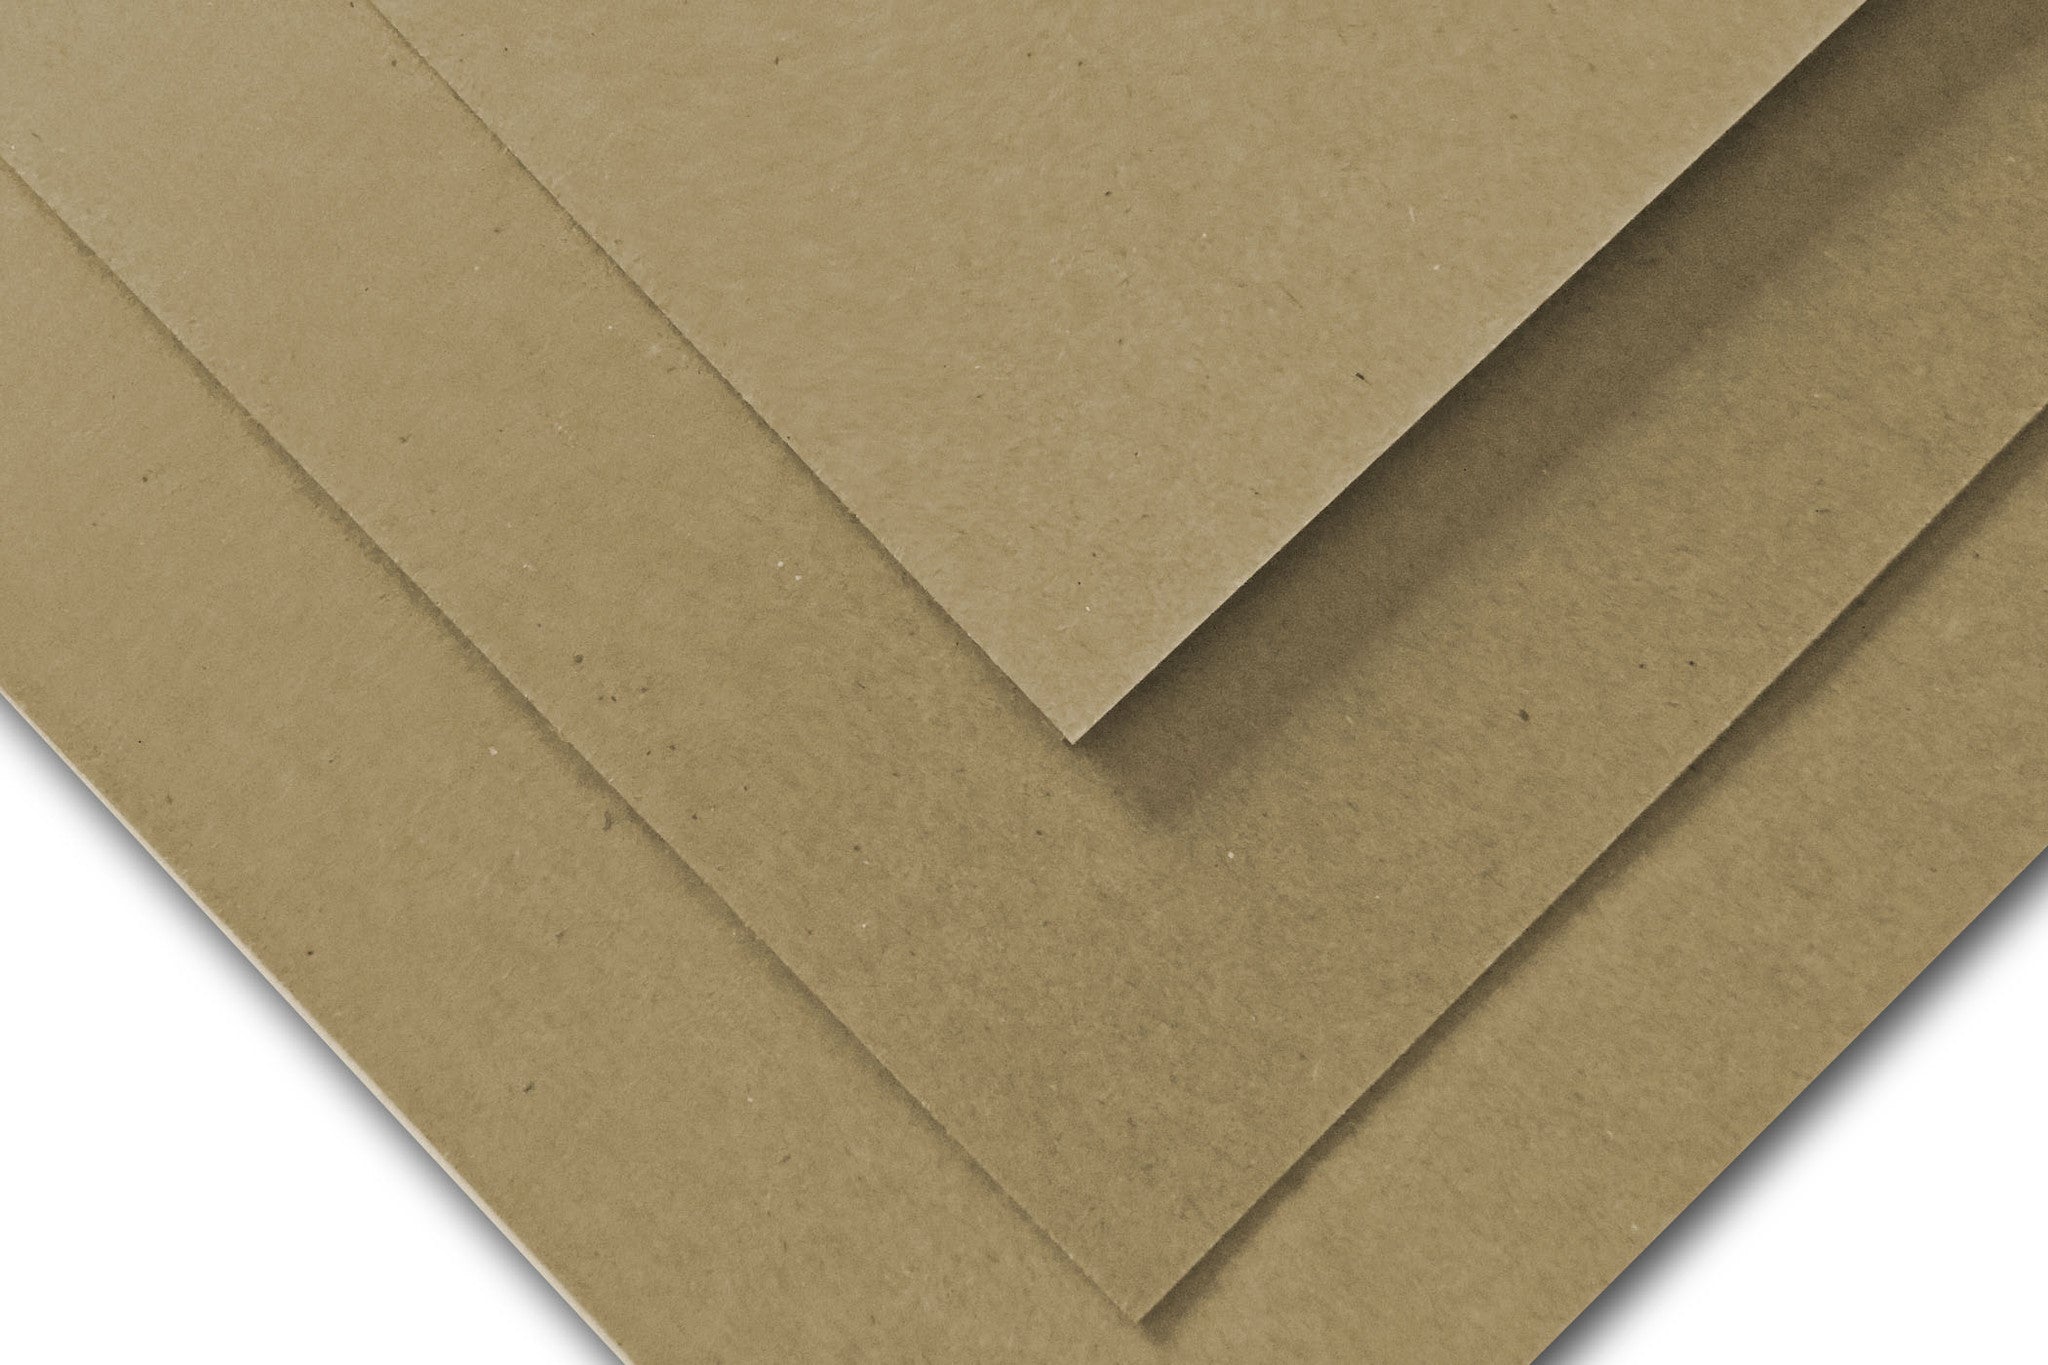 Red Cardstock Paper, 65 lb Cardstock Bulk